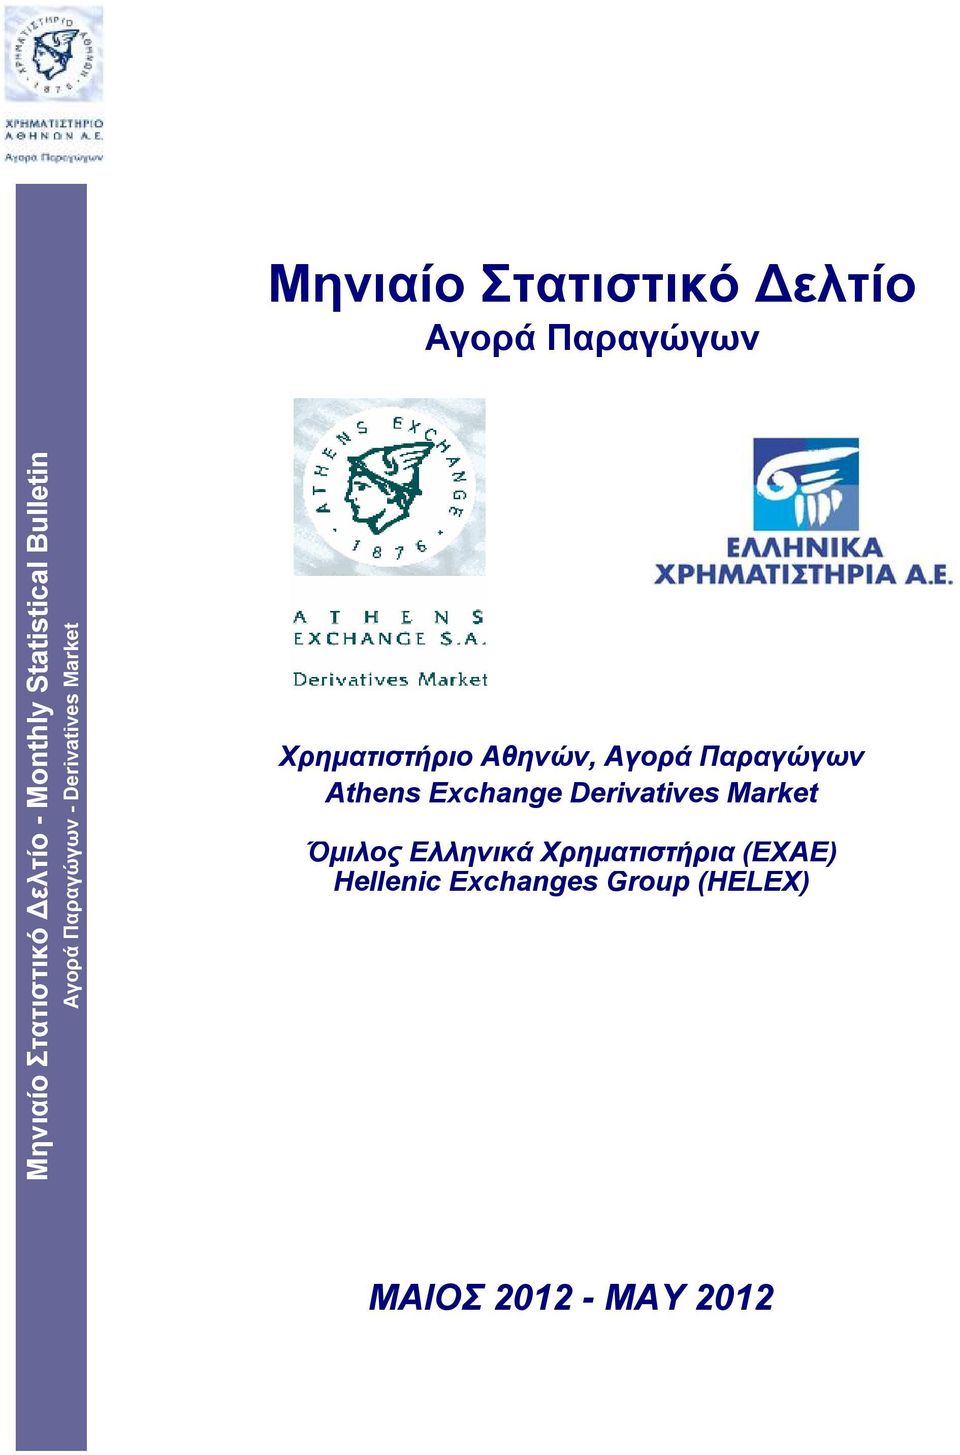 Exchange Derivatives Market Όμιλος Ελληνικά